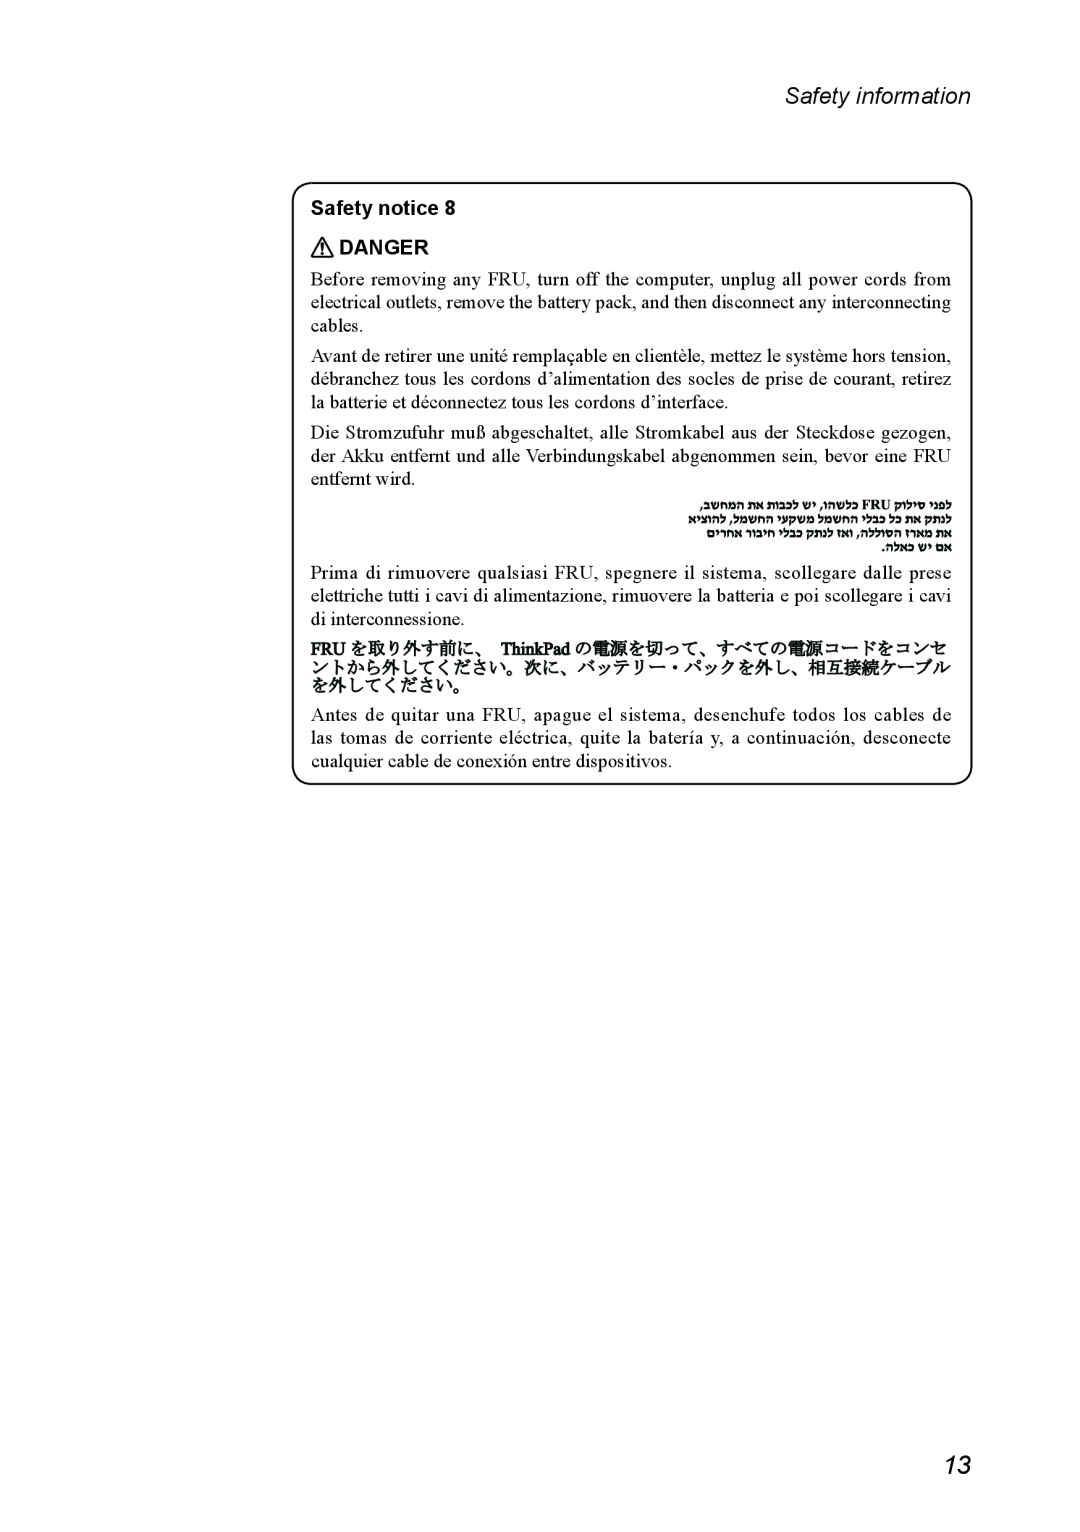 Lenovo 11 manual Safety information, Safety notice DANGER 